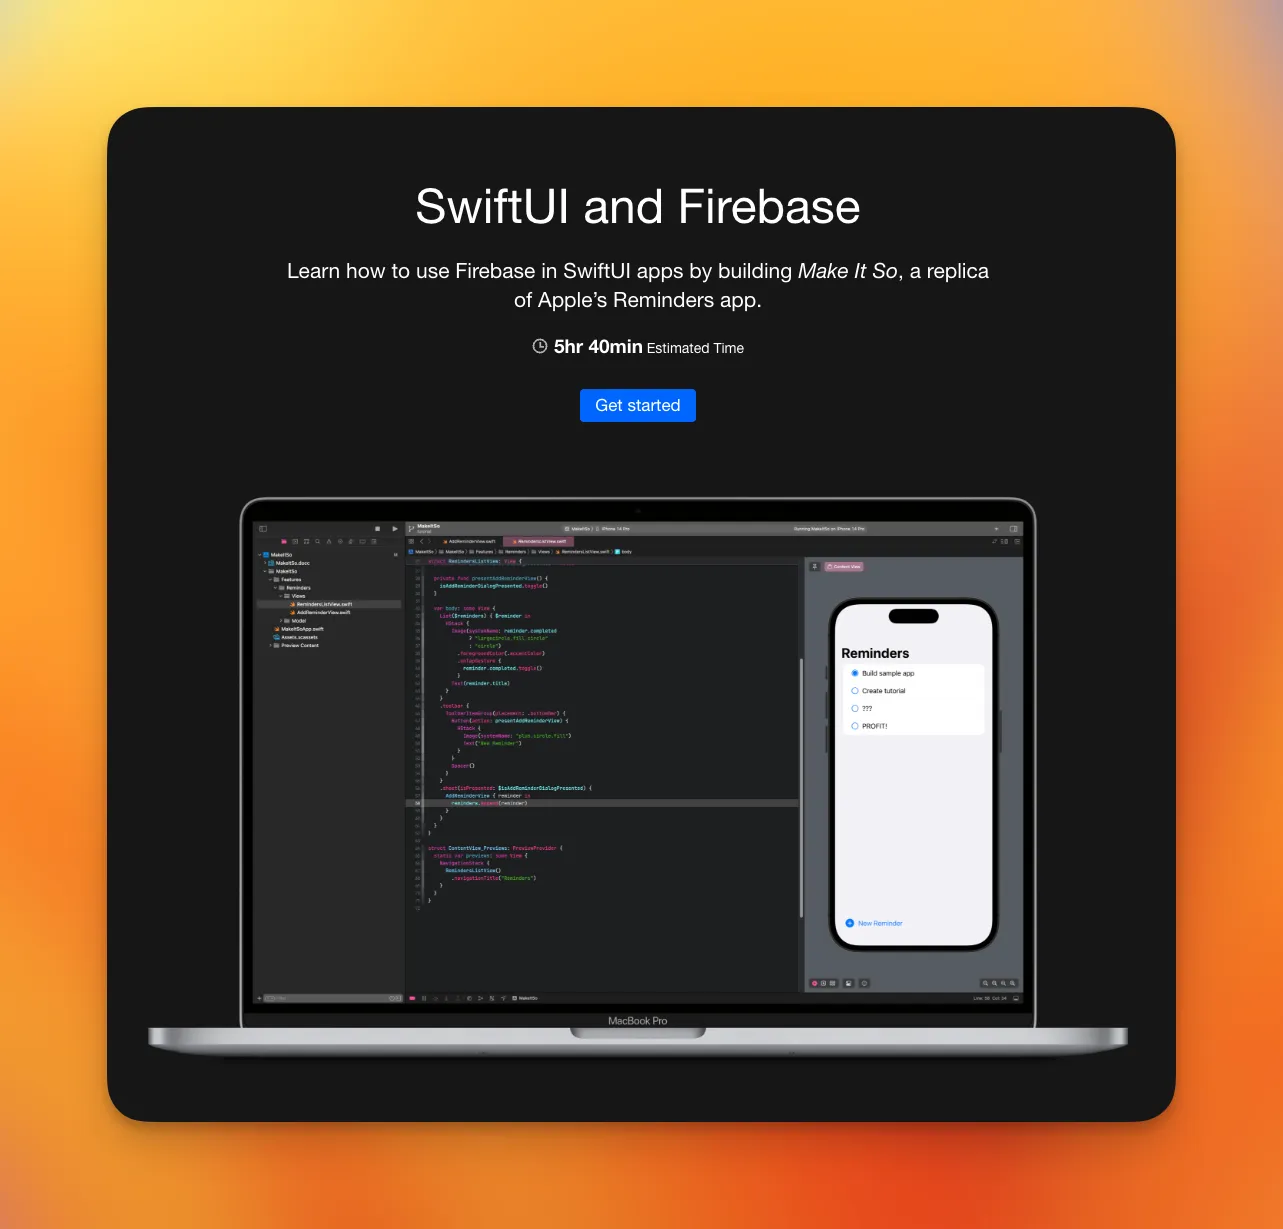 SwiftUI and Firebase